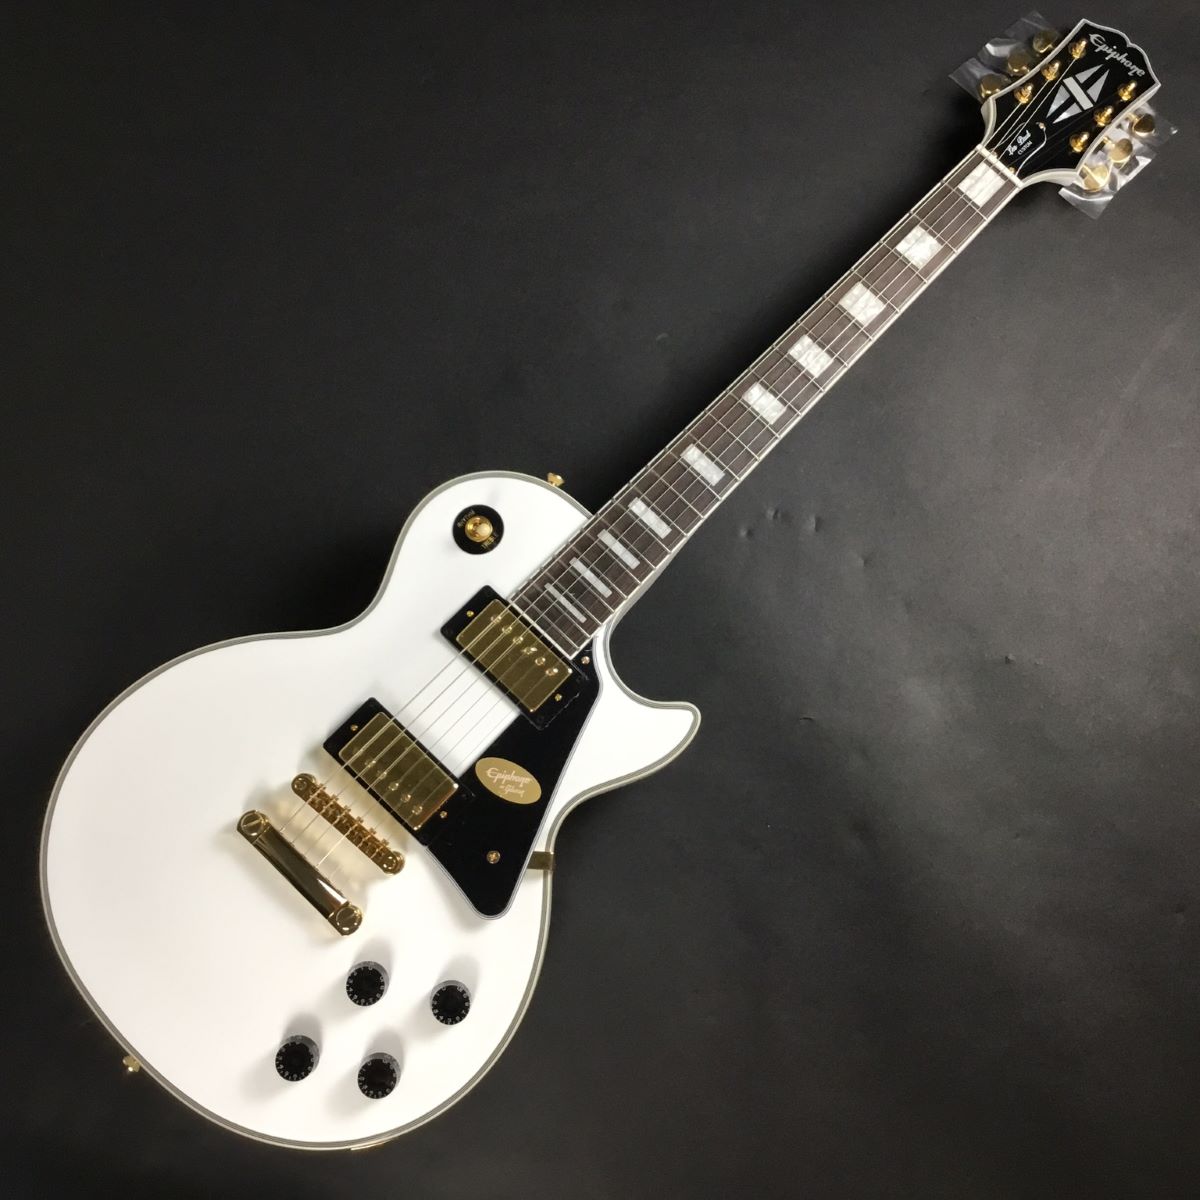 Epiphone Lespaul モデル 白 エレキギター種類レスポールタイプ - ギター